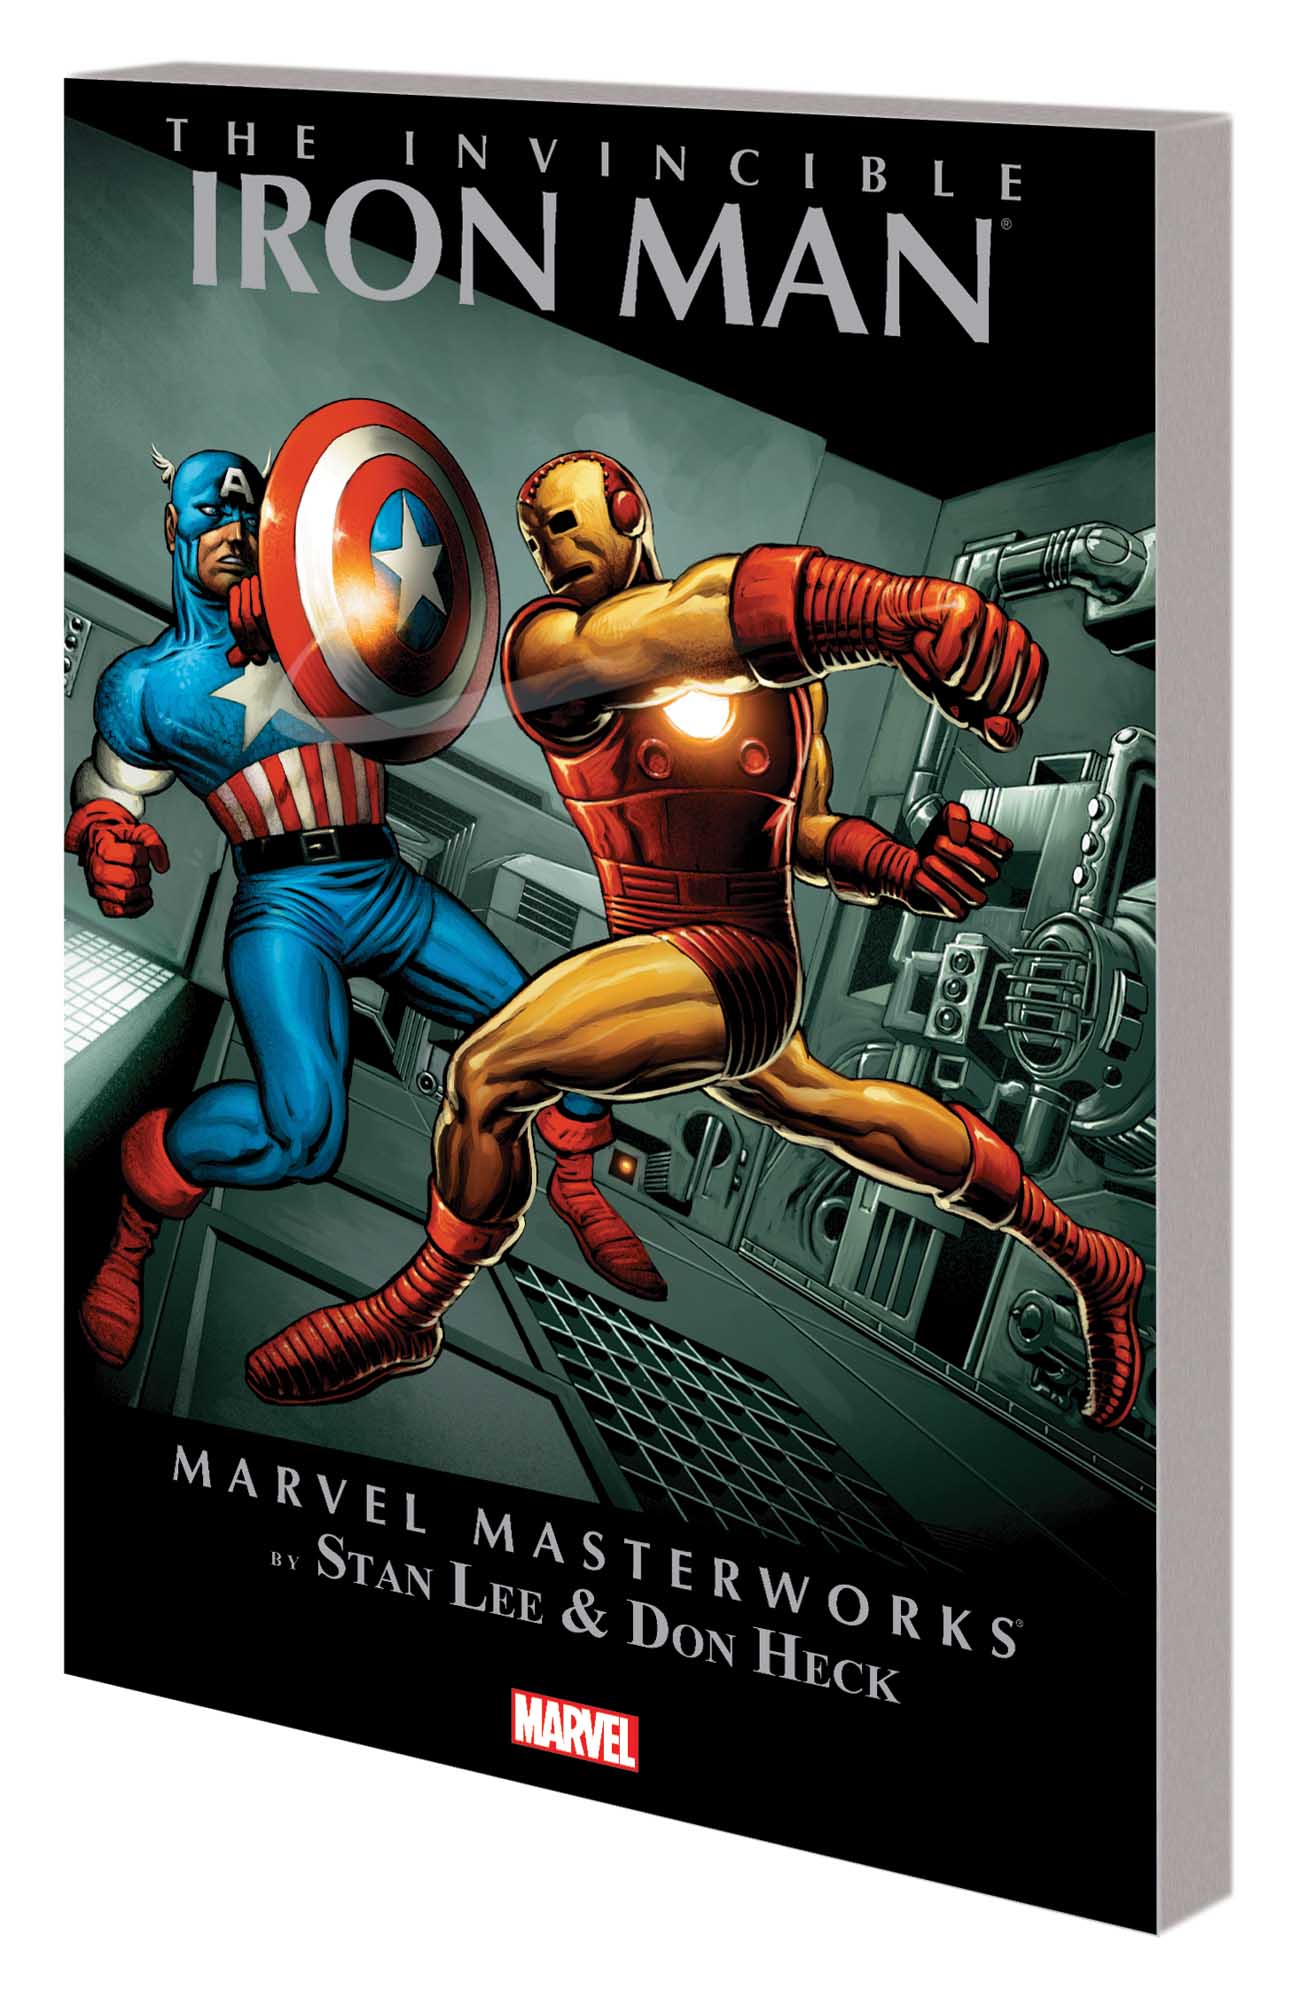 Marvel Masterworks: The Invincible Iron Man Vol. 2 TPB (Trade Paperback)